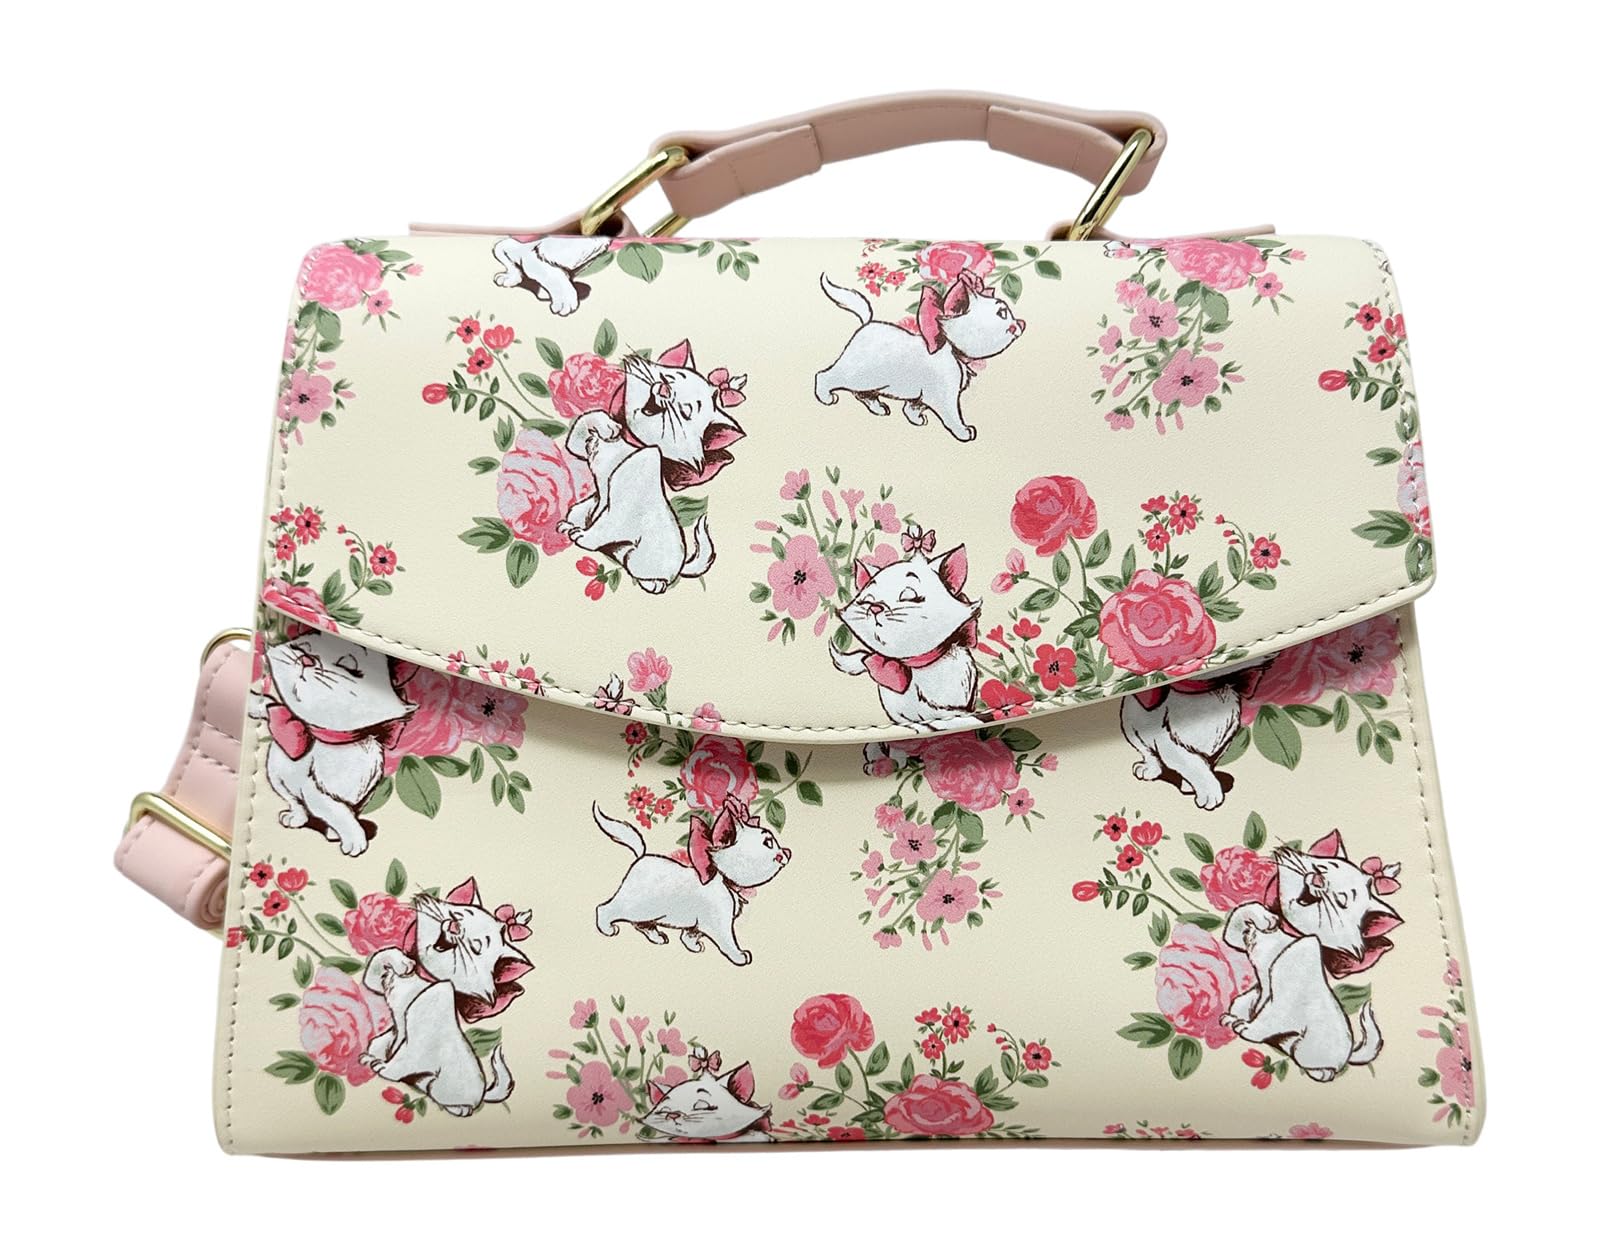 Loungefly Disney The Aristocats Marie Floral Print Crossbody Handbag Purse $35 + Free Shipping